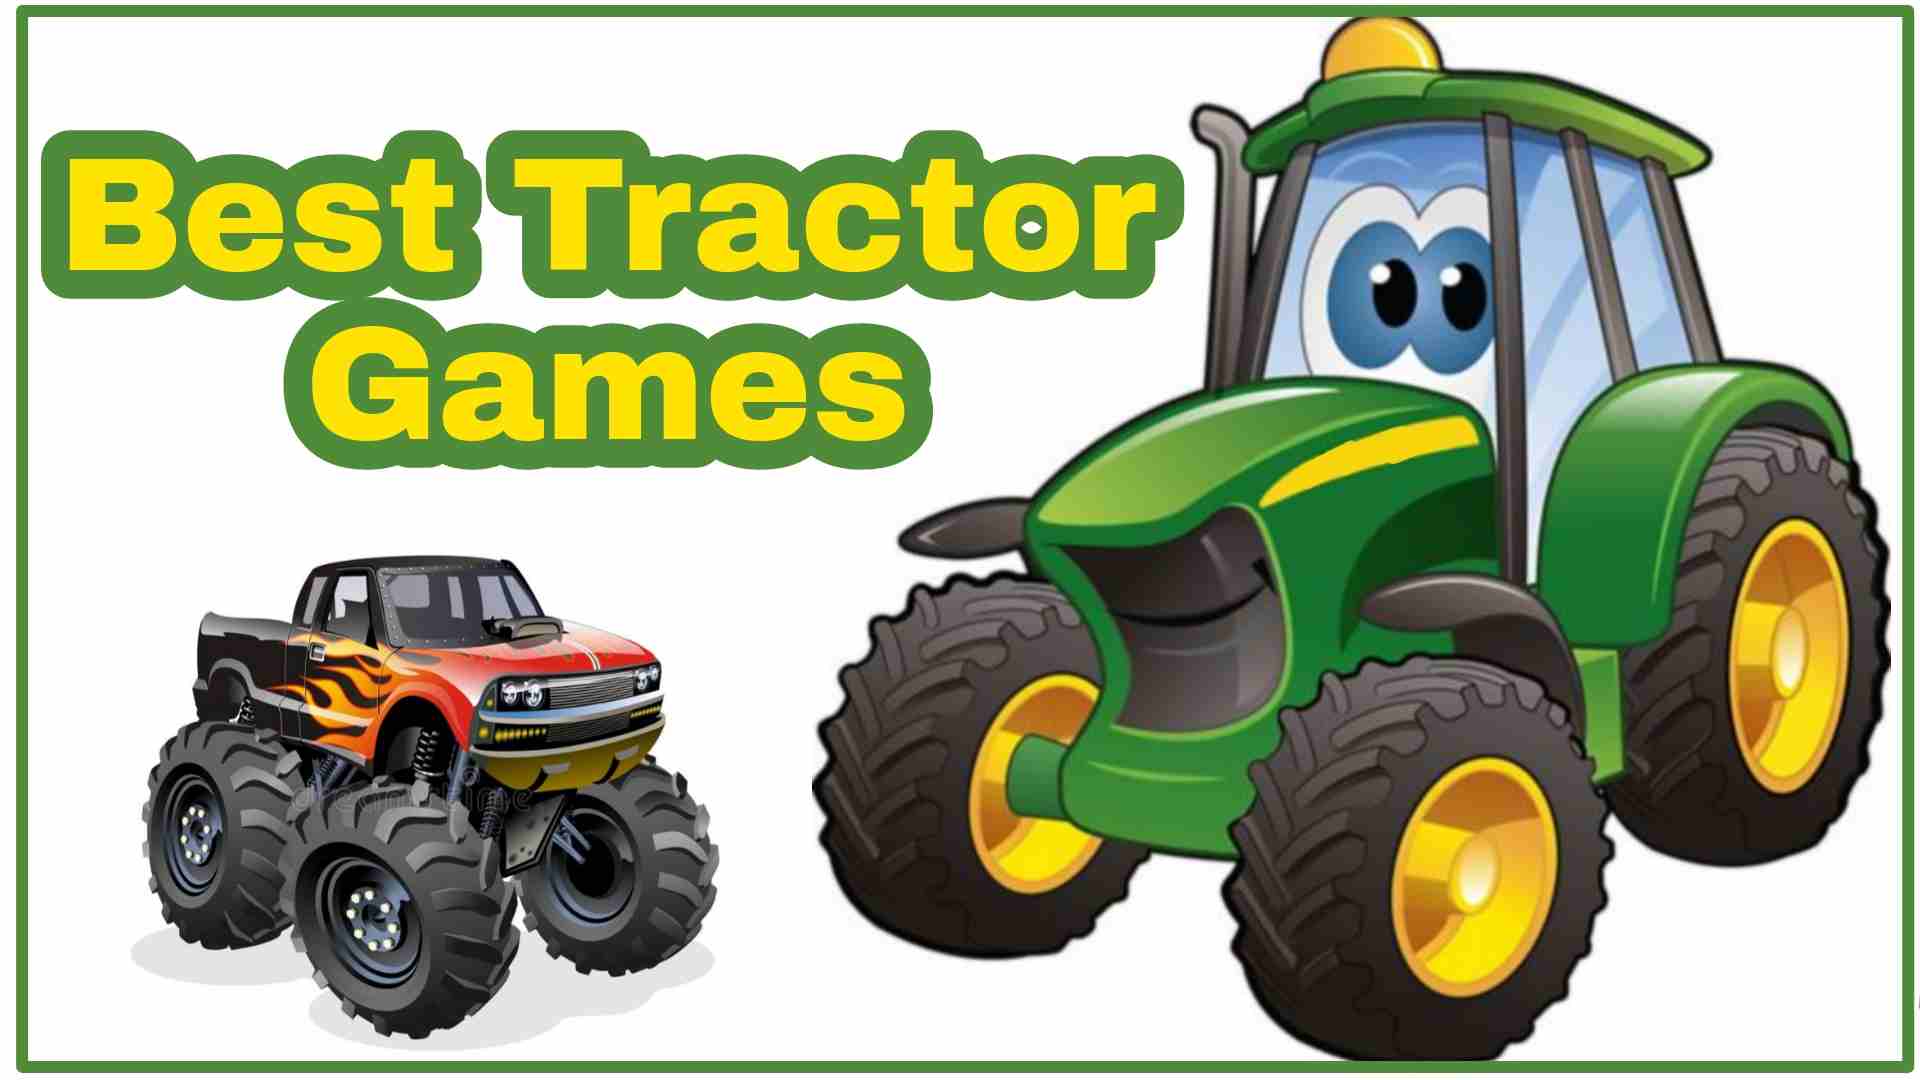 Tractor वाला Game Download करे [एंड्राइड फ़ोन के लिए] - India Ka Best